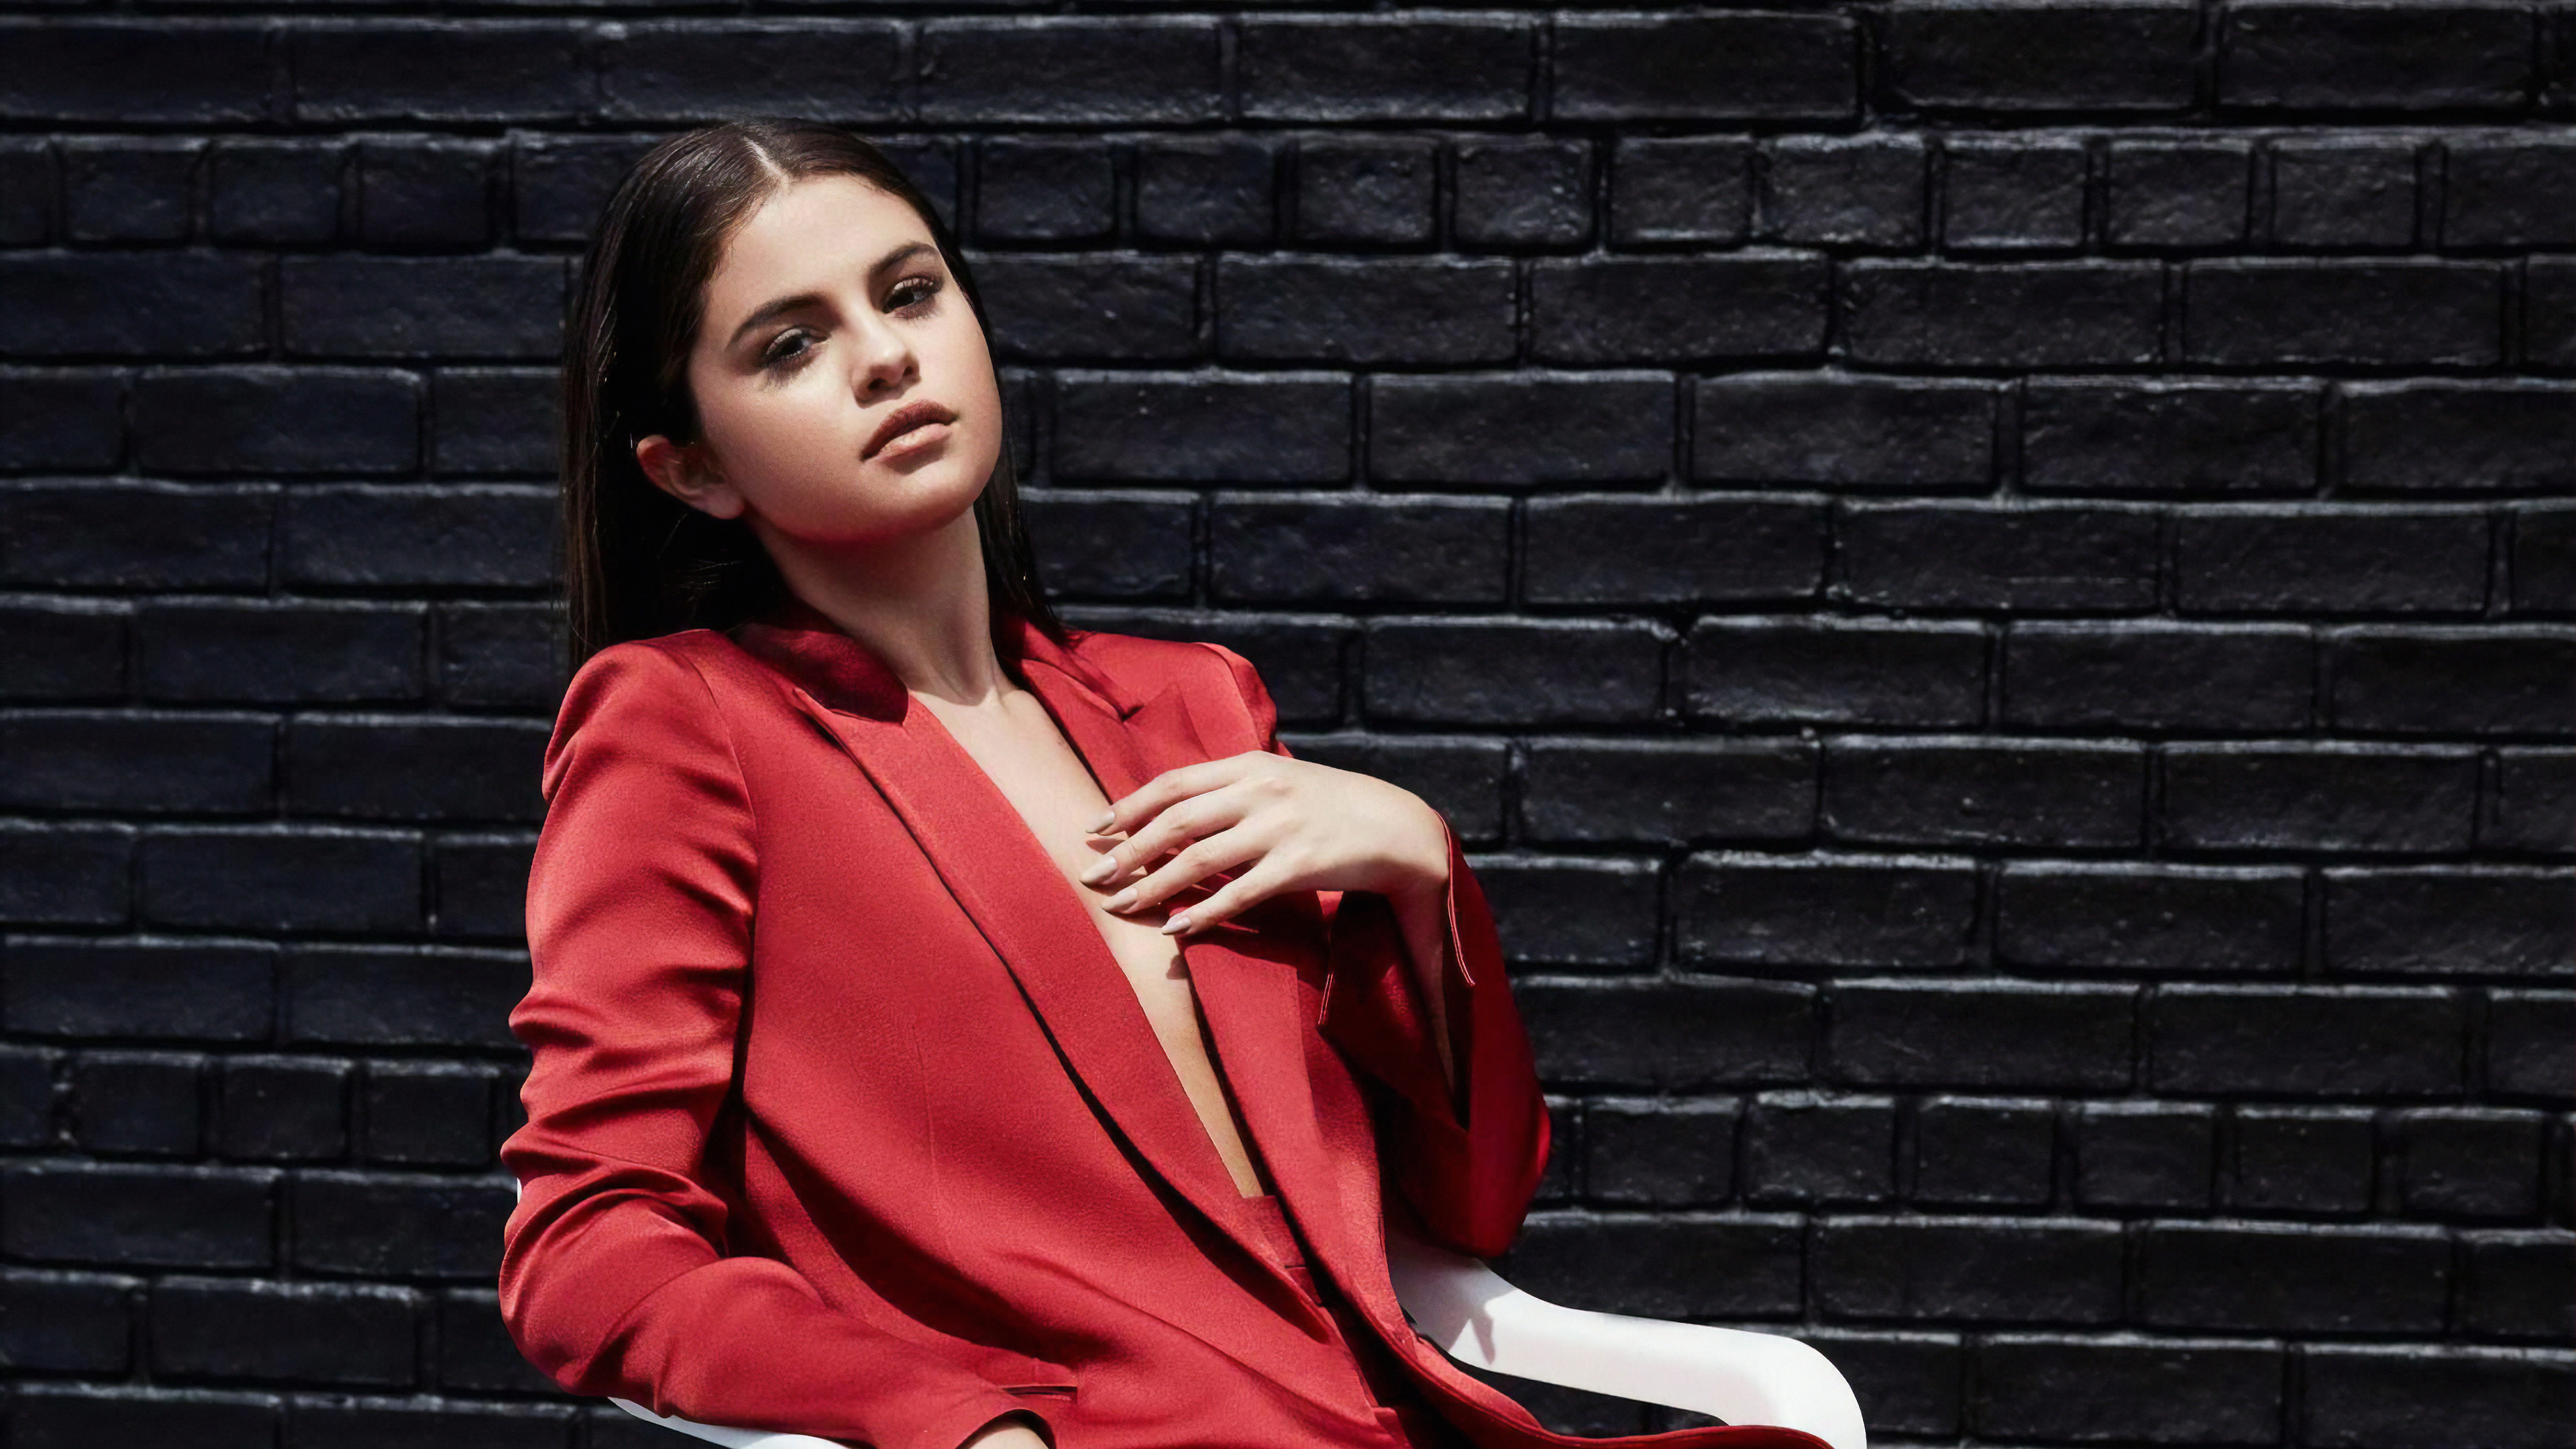 Selena Gomez Billboard Photoshoot 2017 Wallpapers